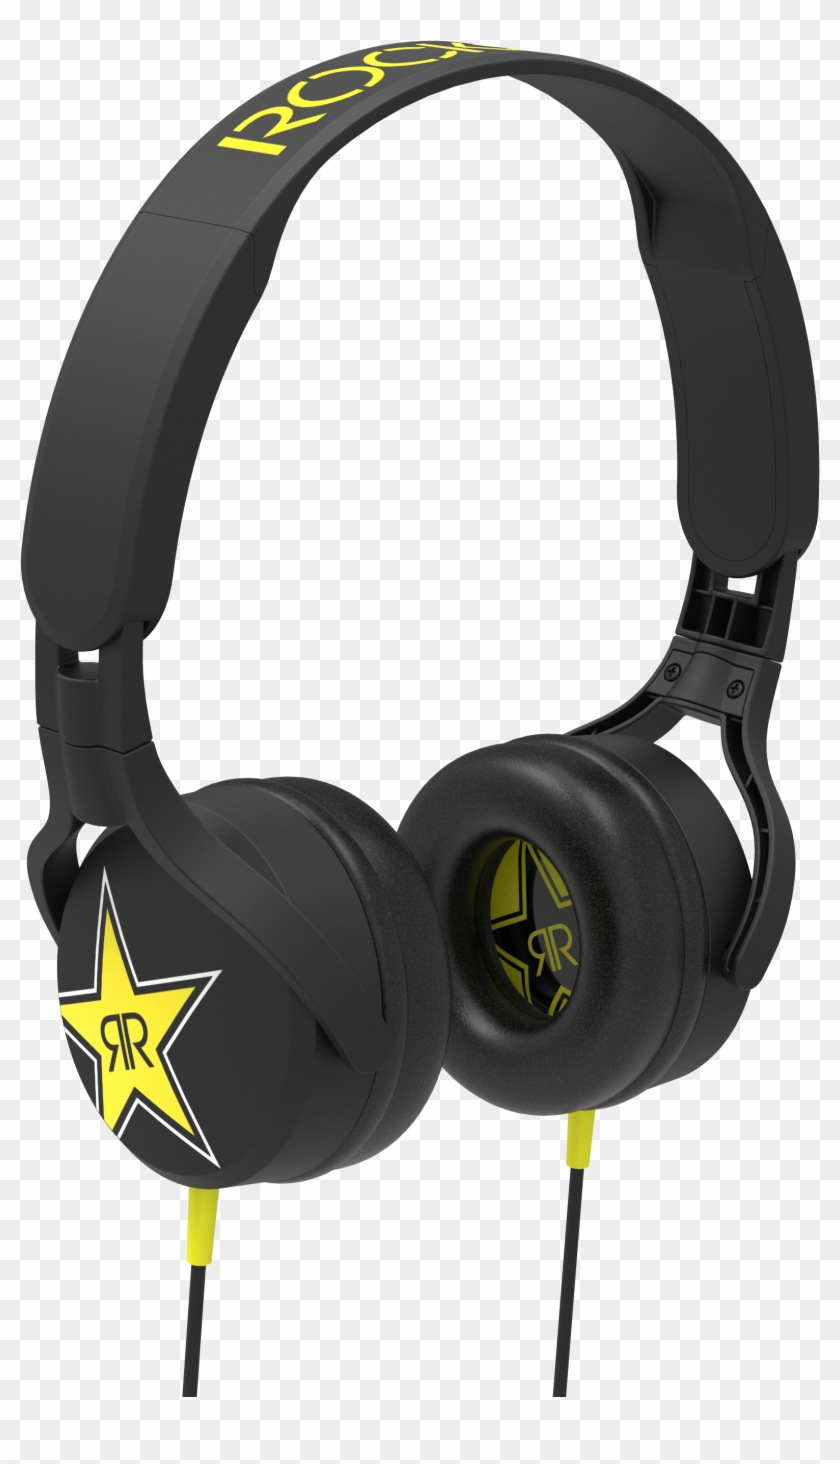 Scosche Rockstar Edition On-ear Lightweight Wired Headphones - Rockstar Headphones Clipart #4278437